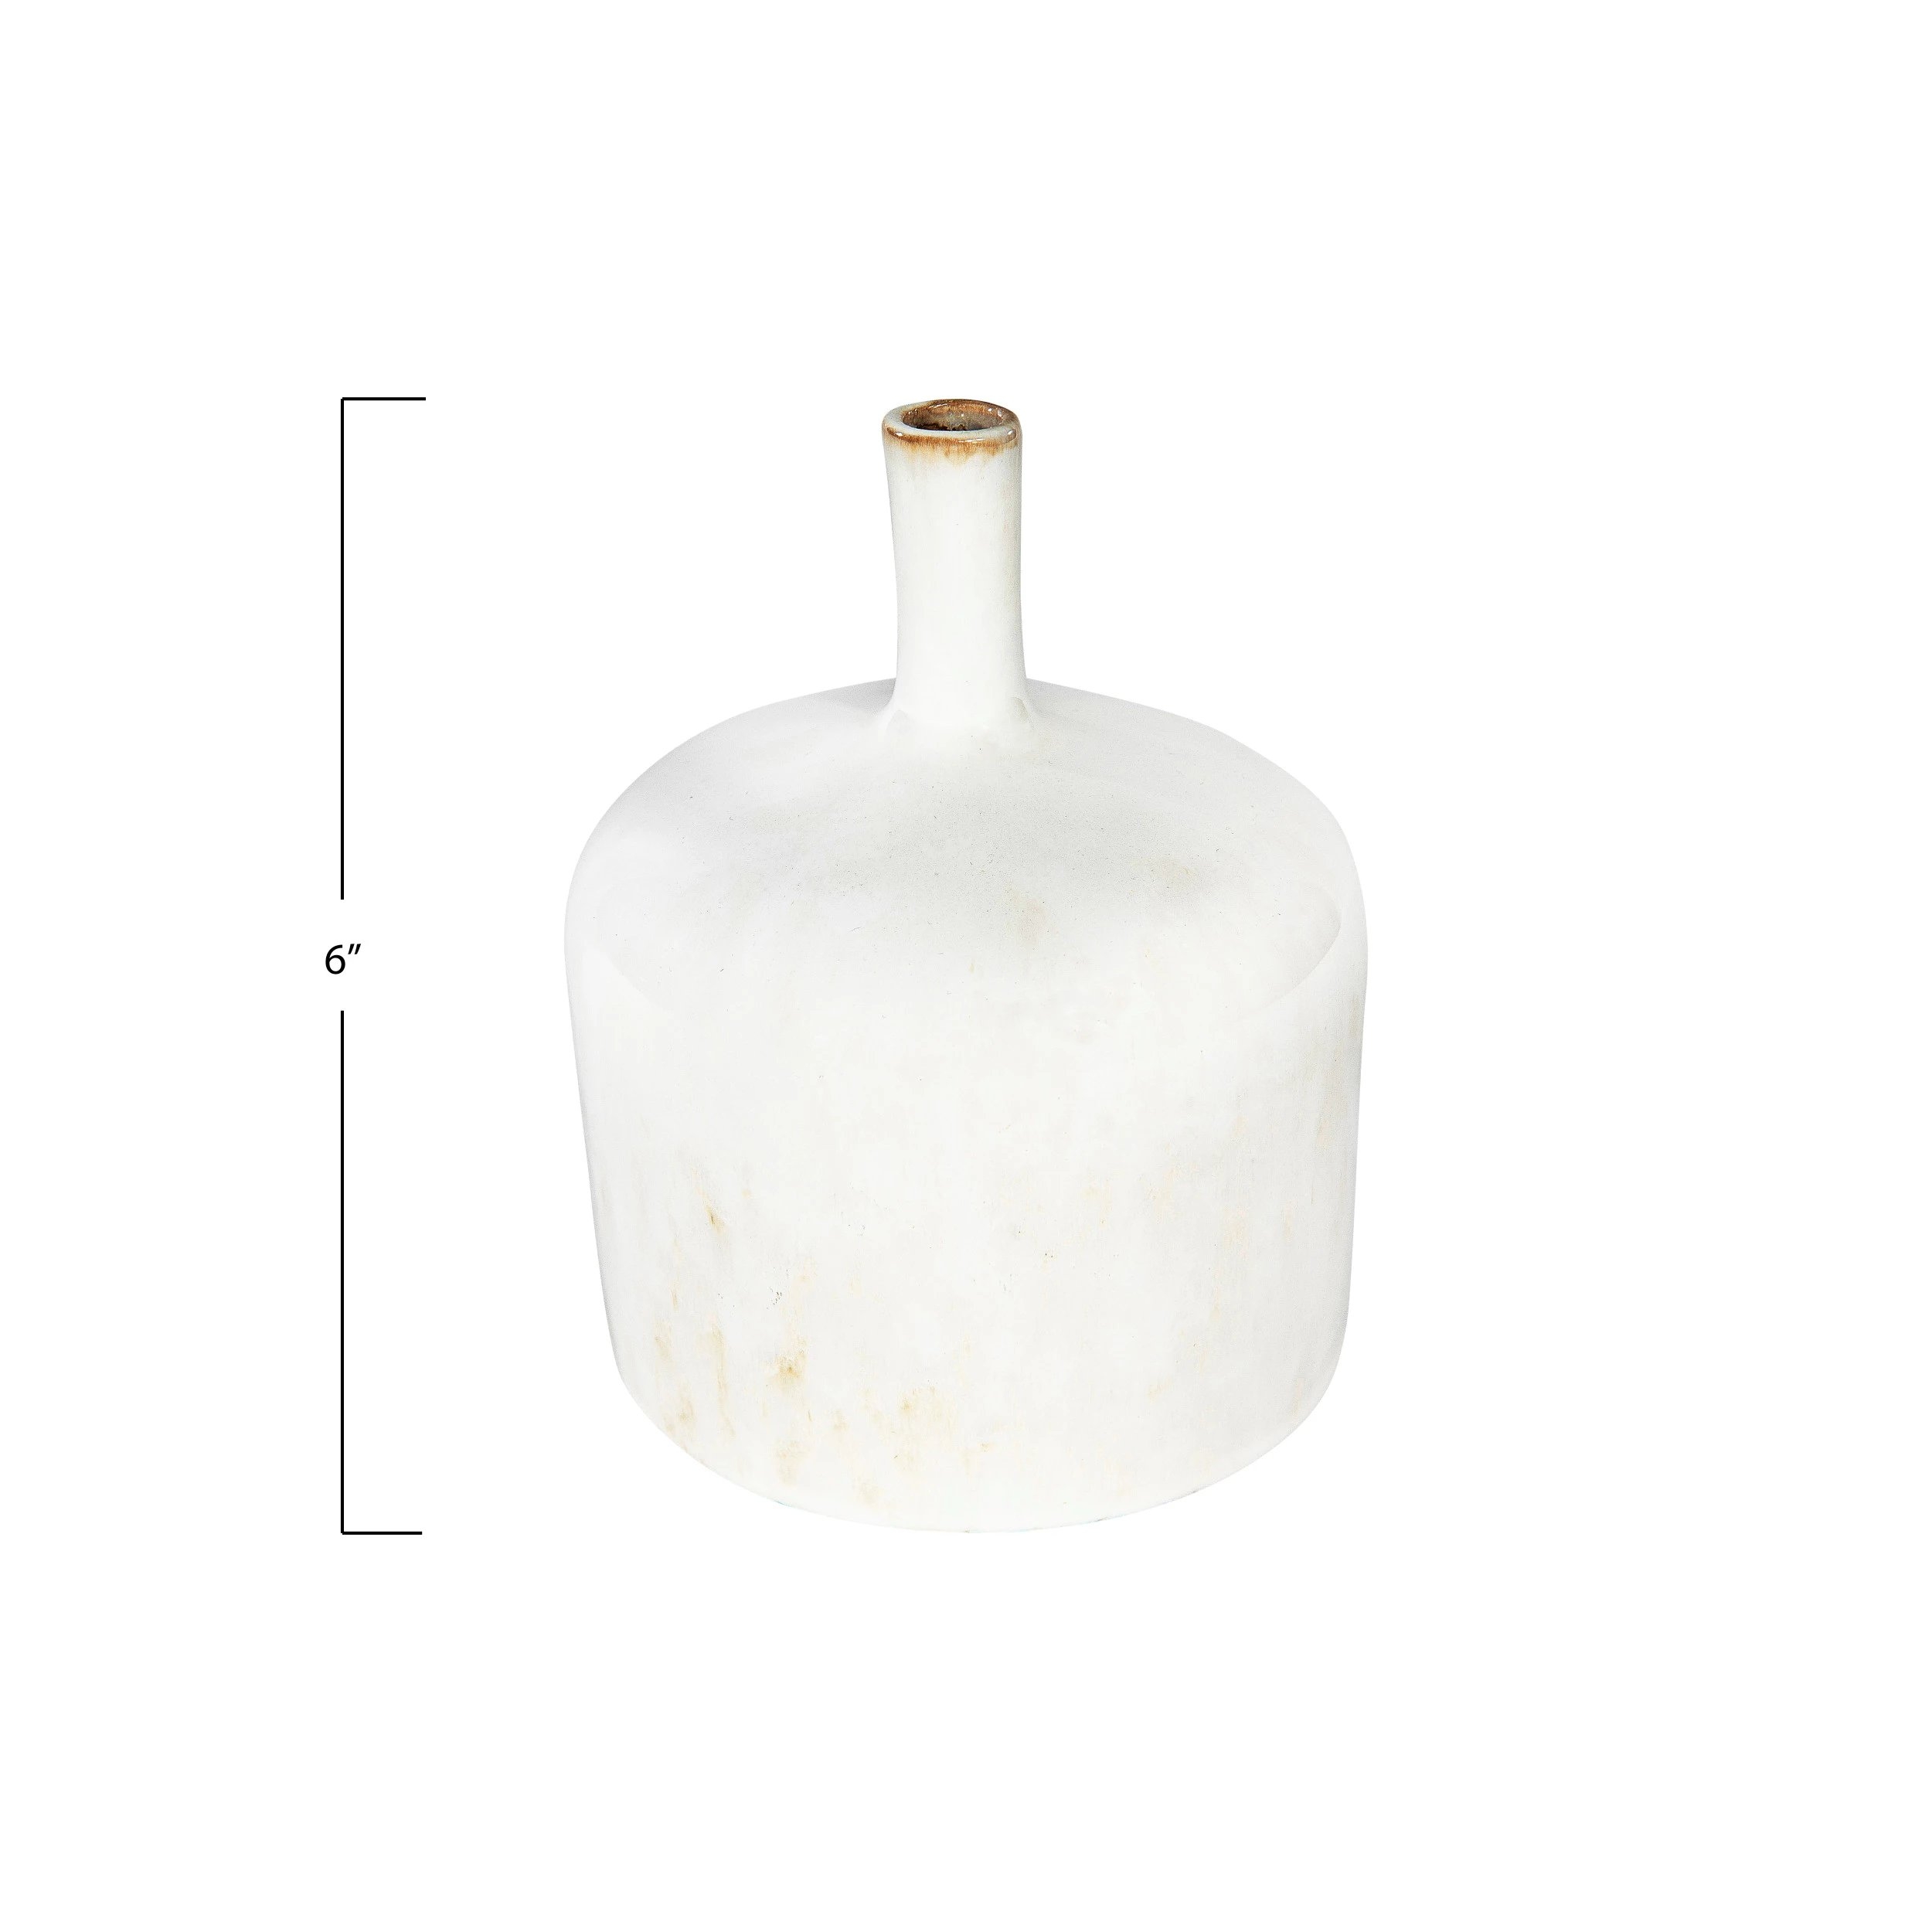 Small Cream Stoneware Vase with Reactive Glaze Finish (Each one will vary) - Image 2